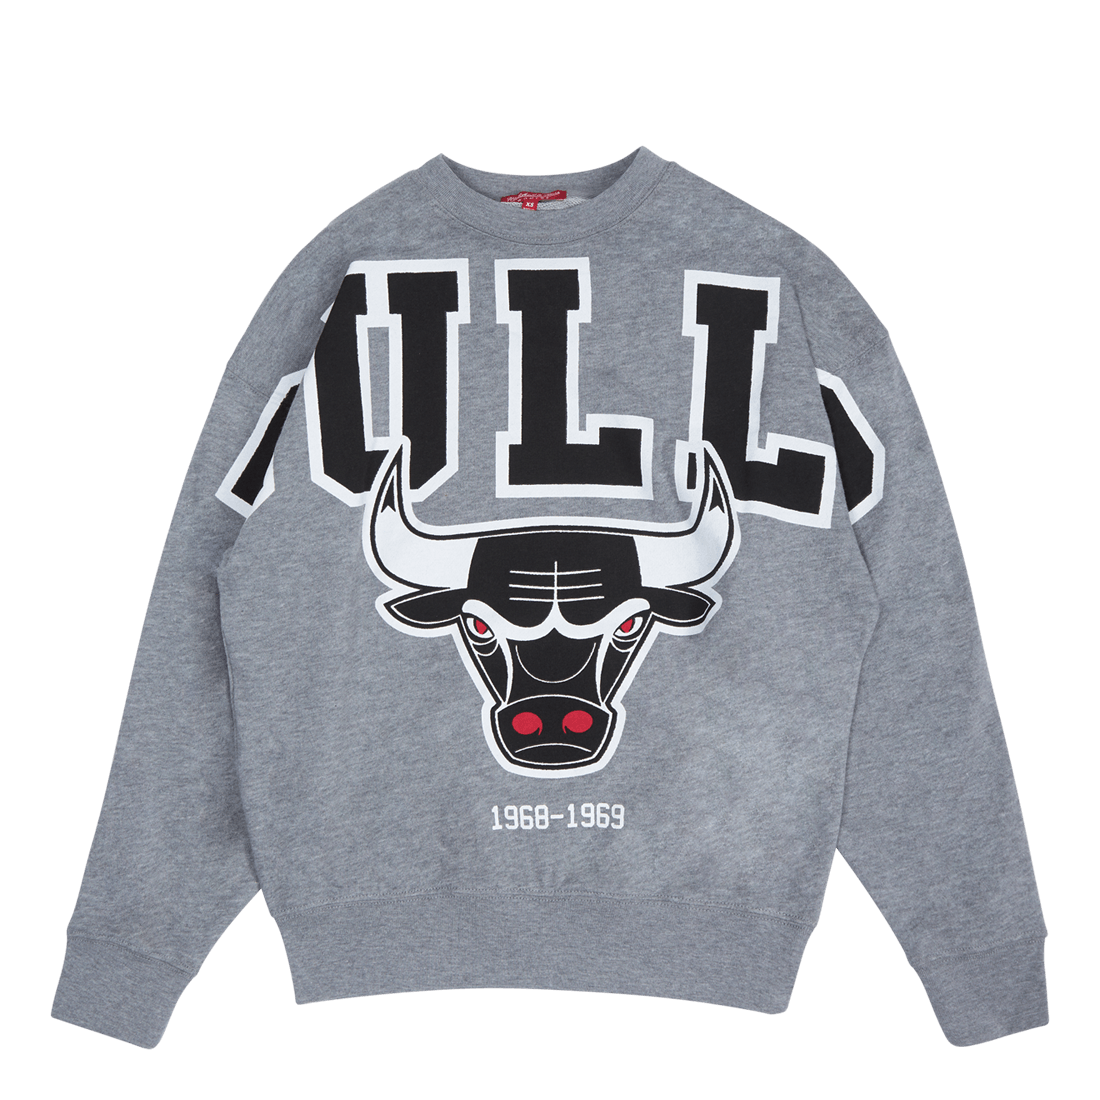 Women's Bulls Logo Fleece